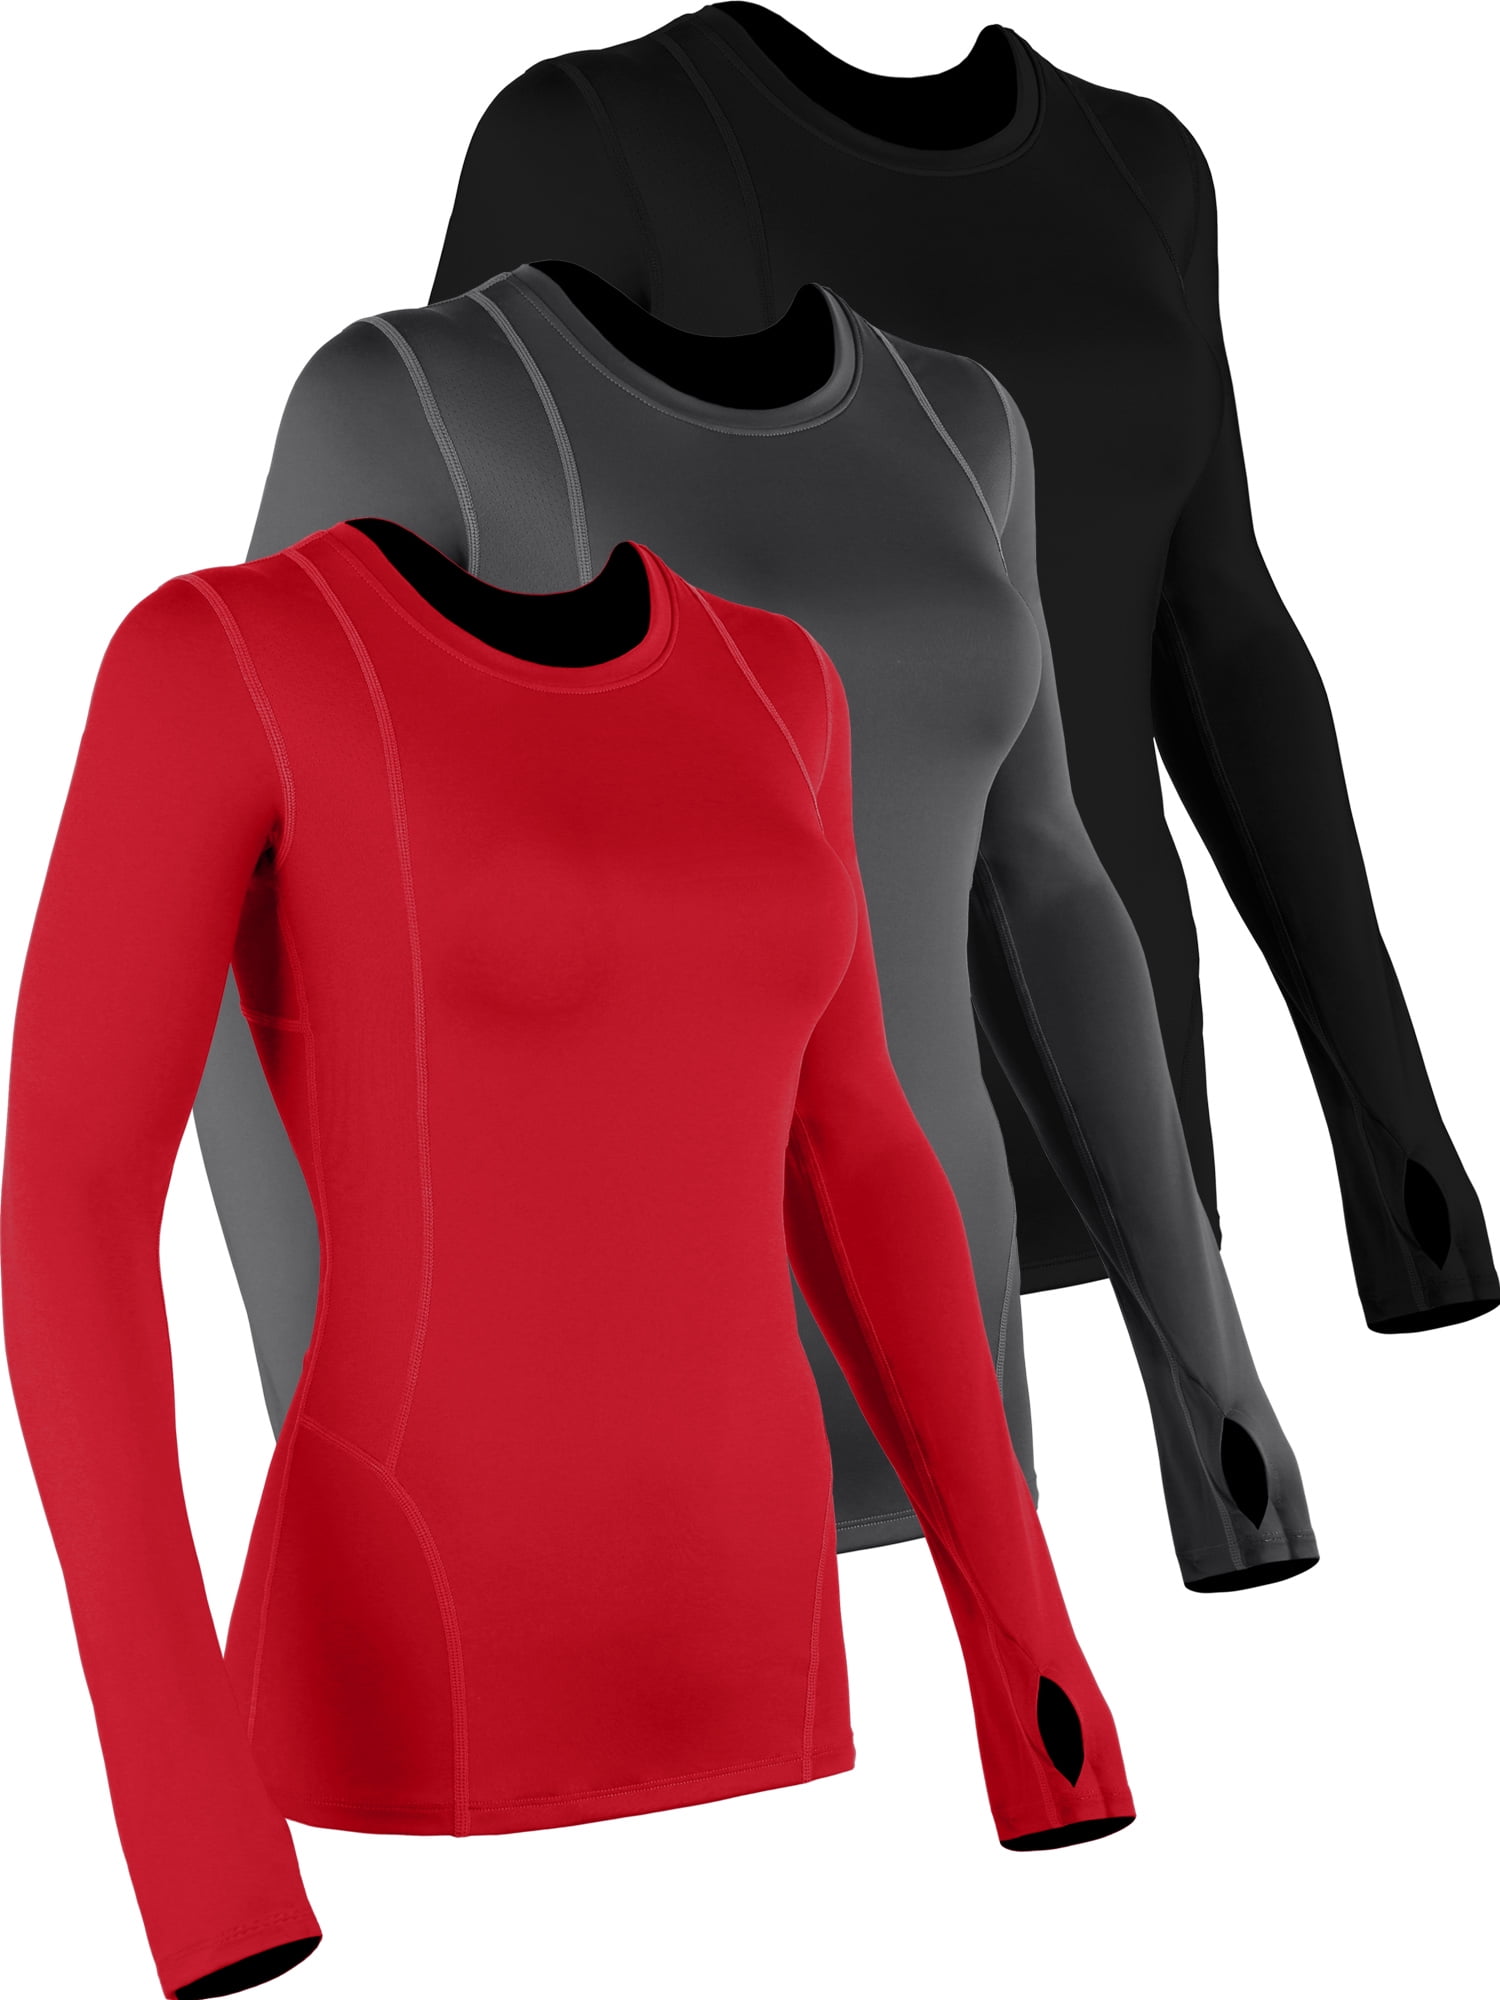 MathCat Breathable Seamless Long Sleeve Workout Shirts Sports